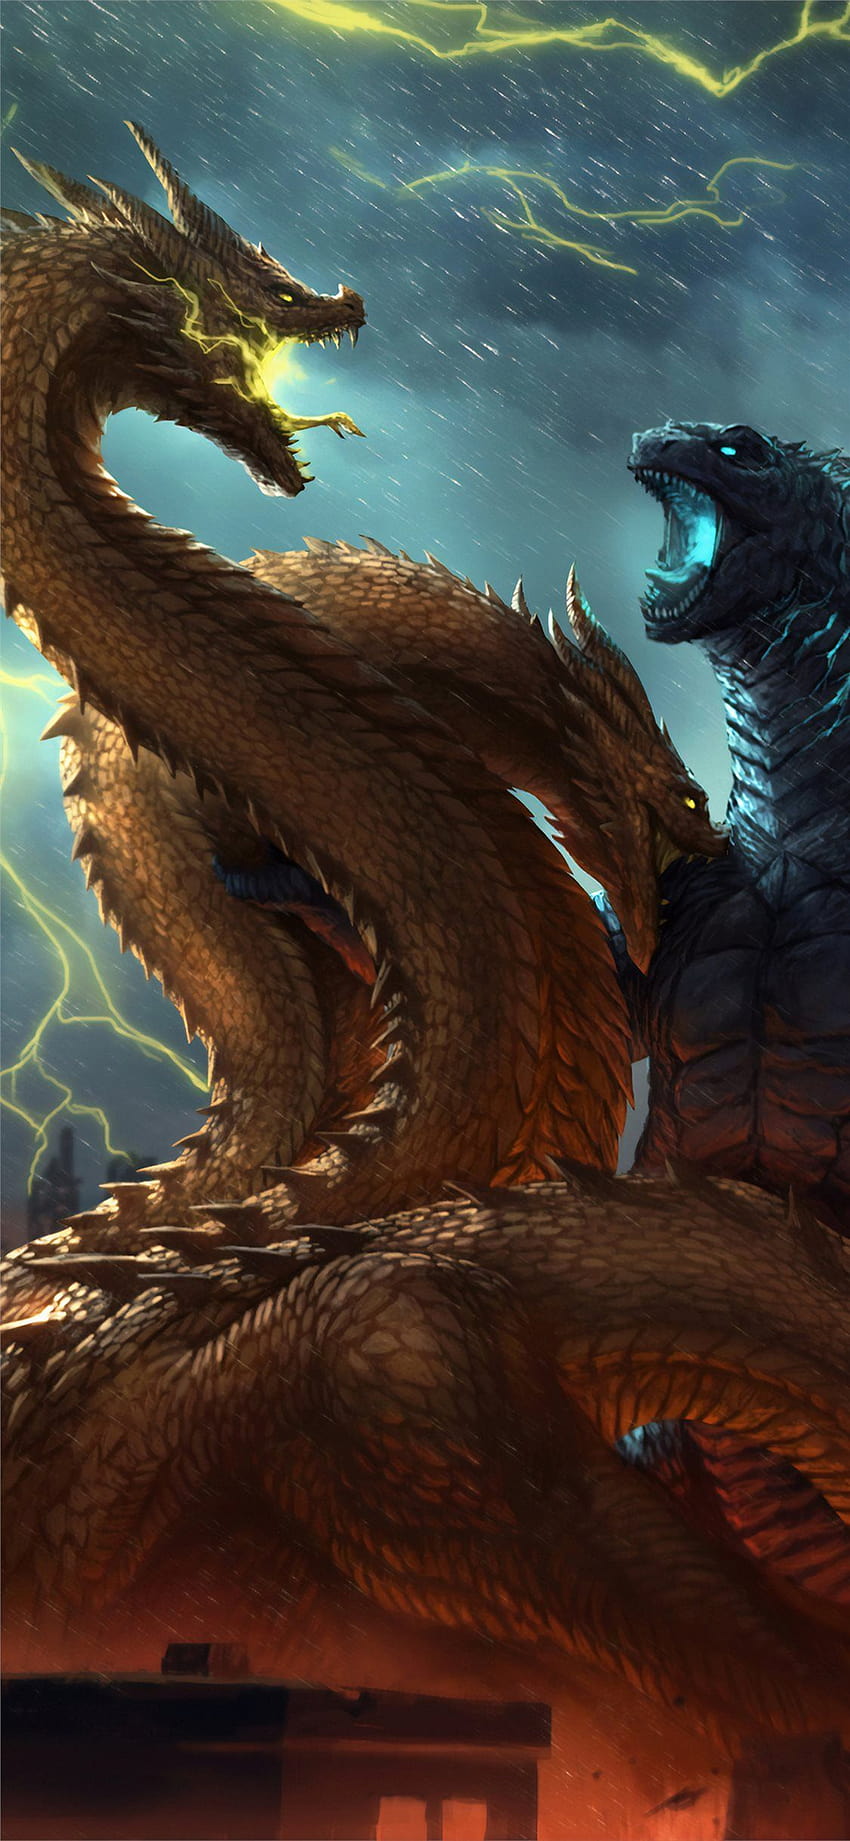 Mejor dragón iPhone X, dragones vs godzilla fondo de pantalla del teléfono